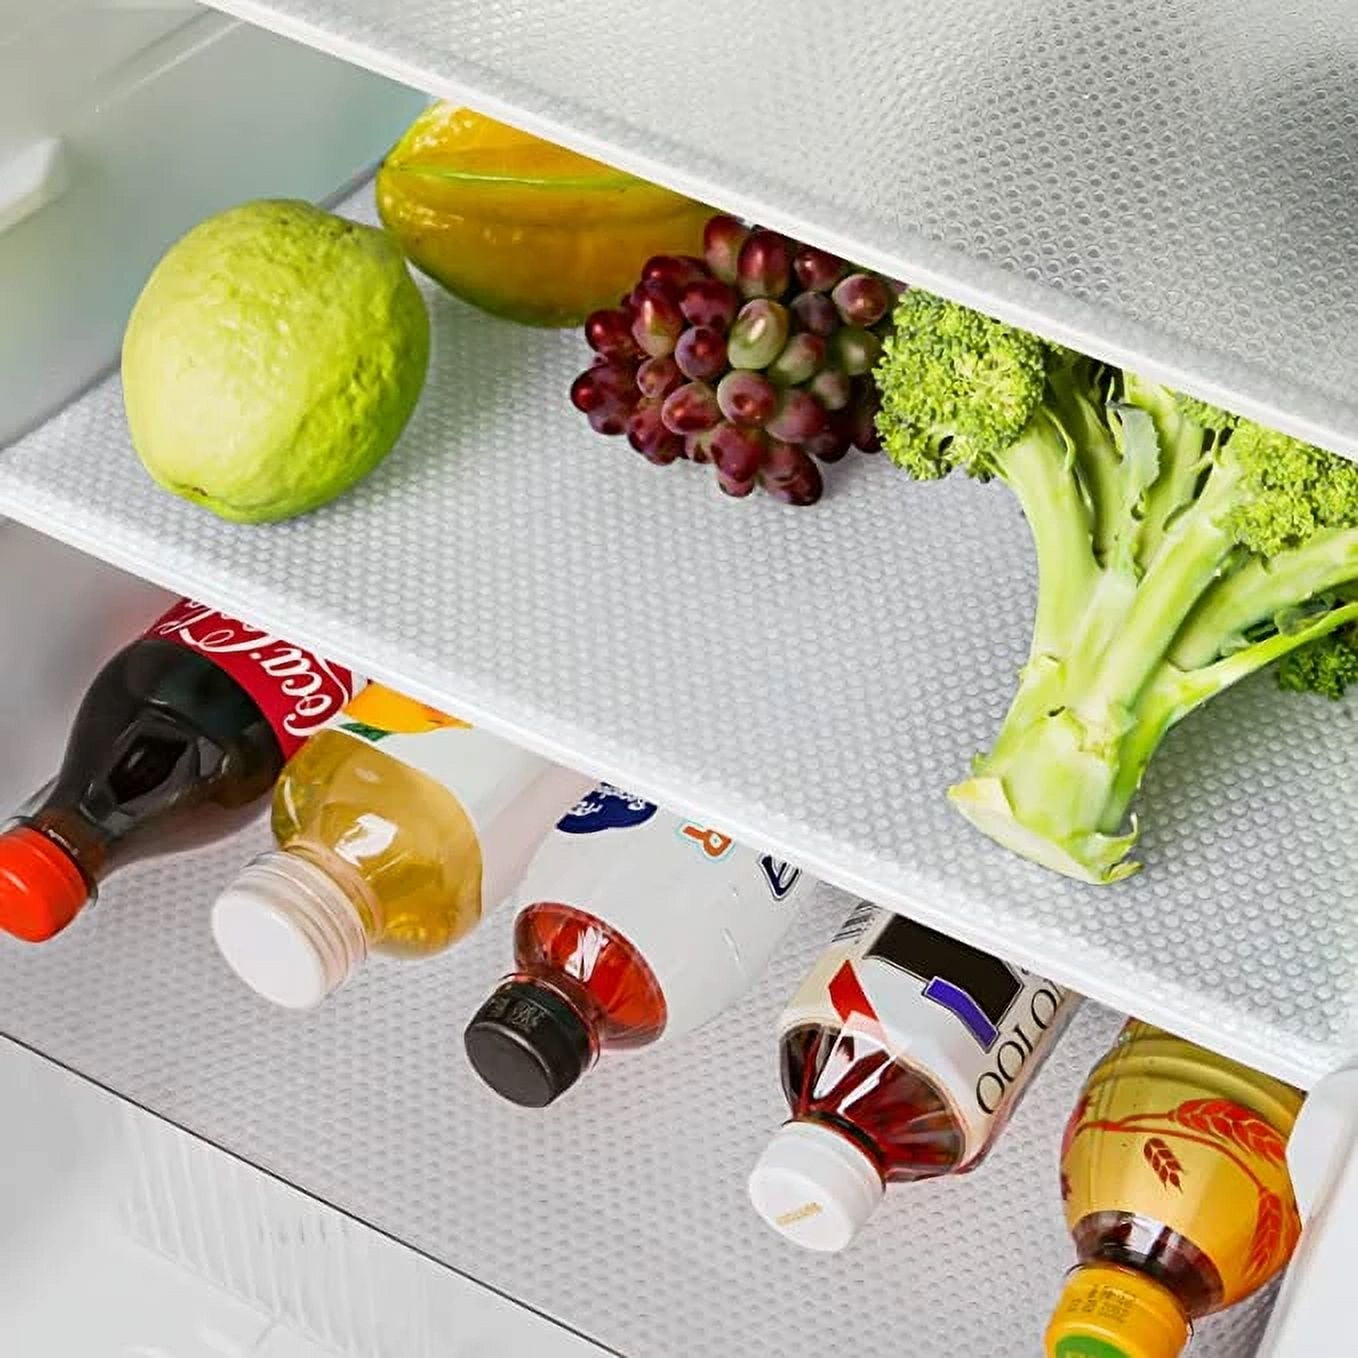 4 Washable Antibacterial Refrigerator Mats - Inspire Uplift